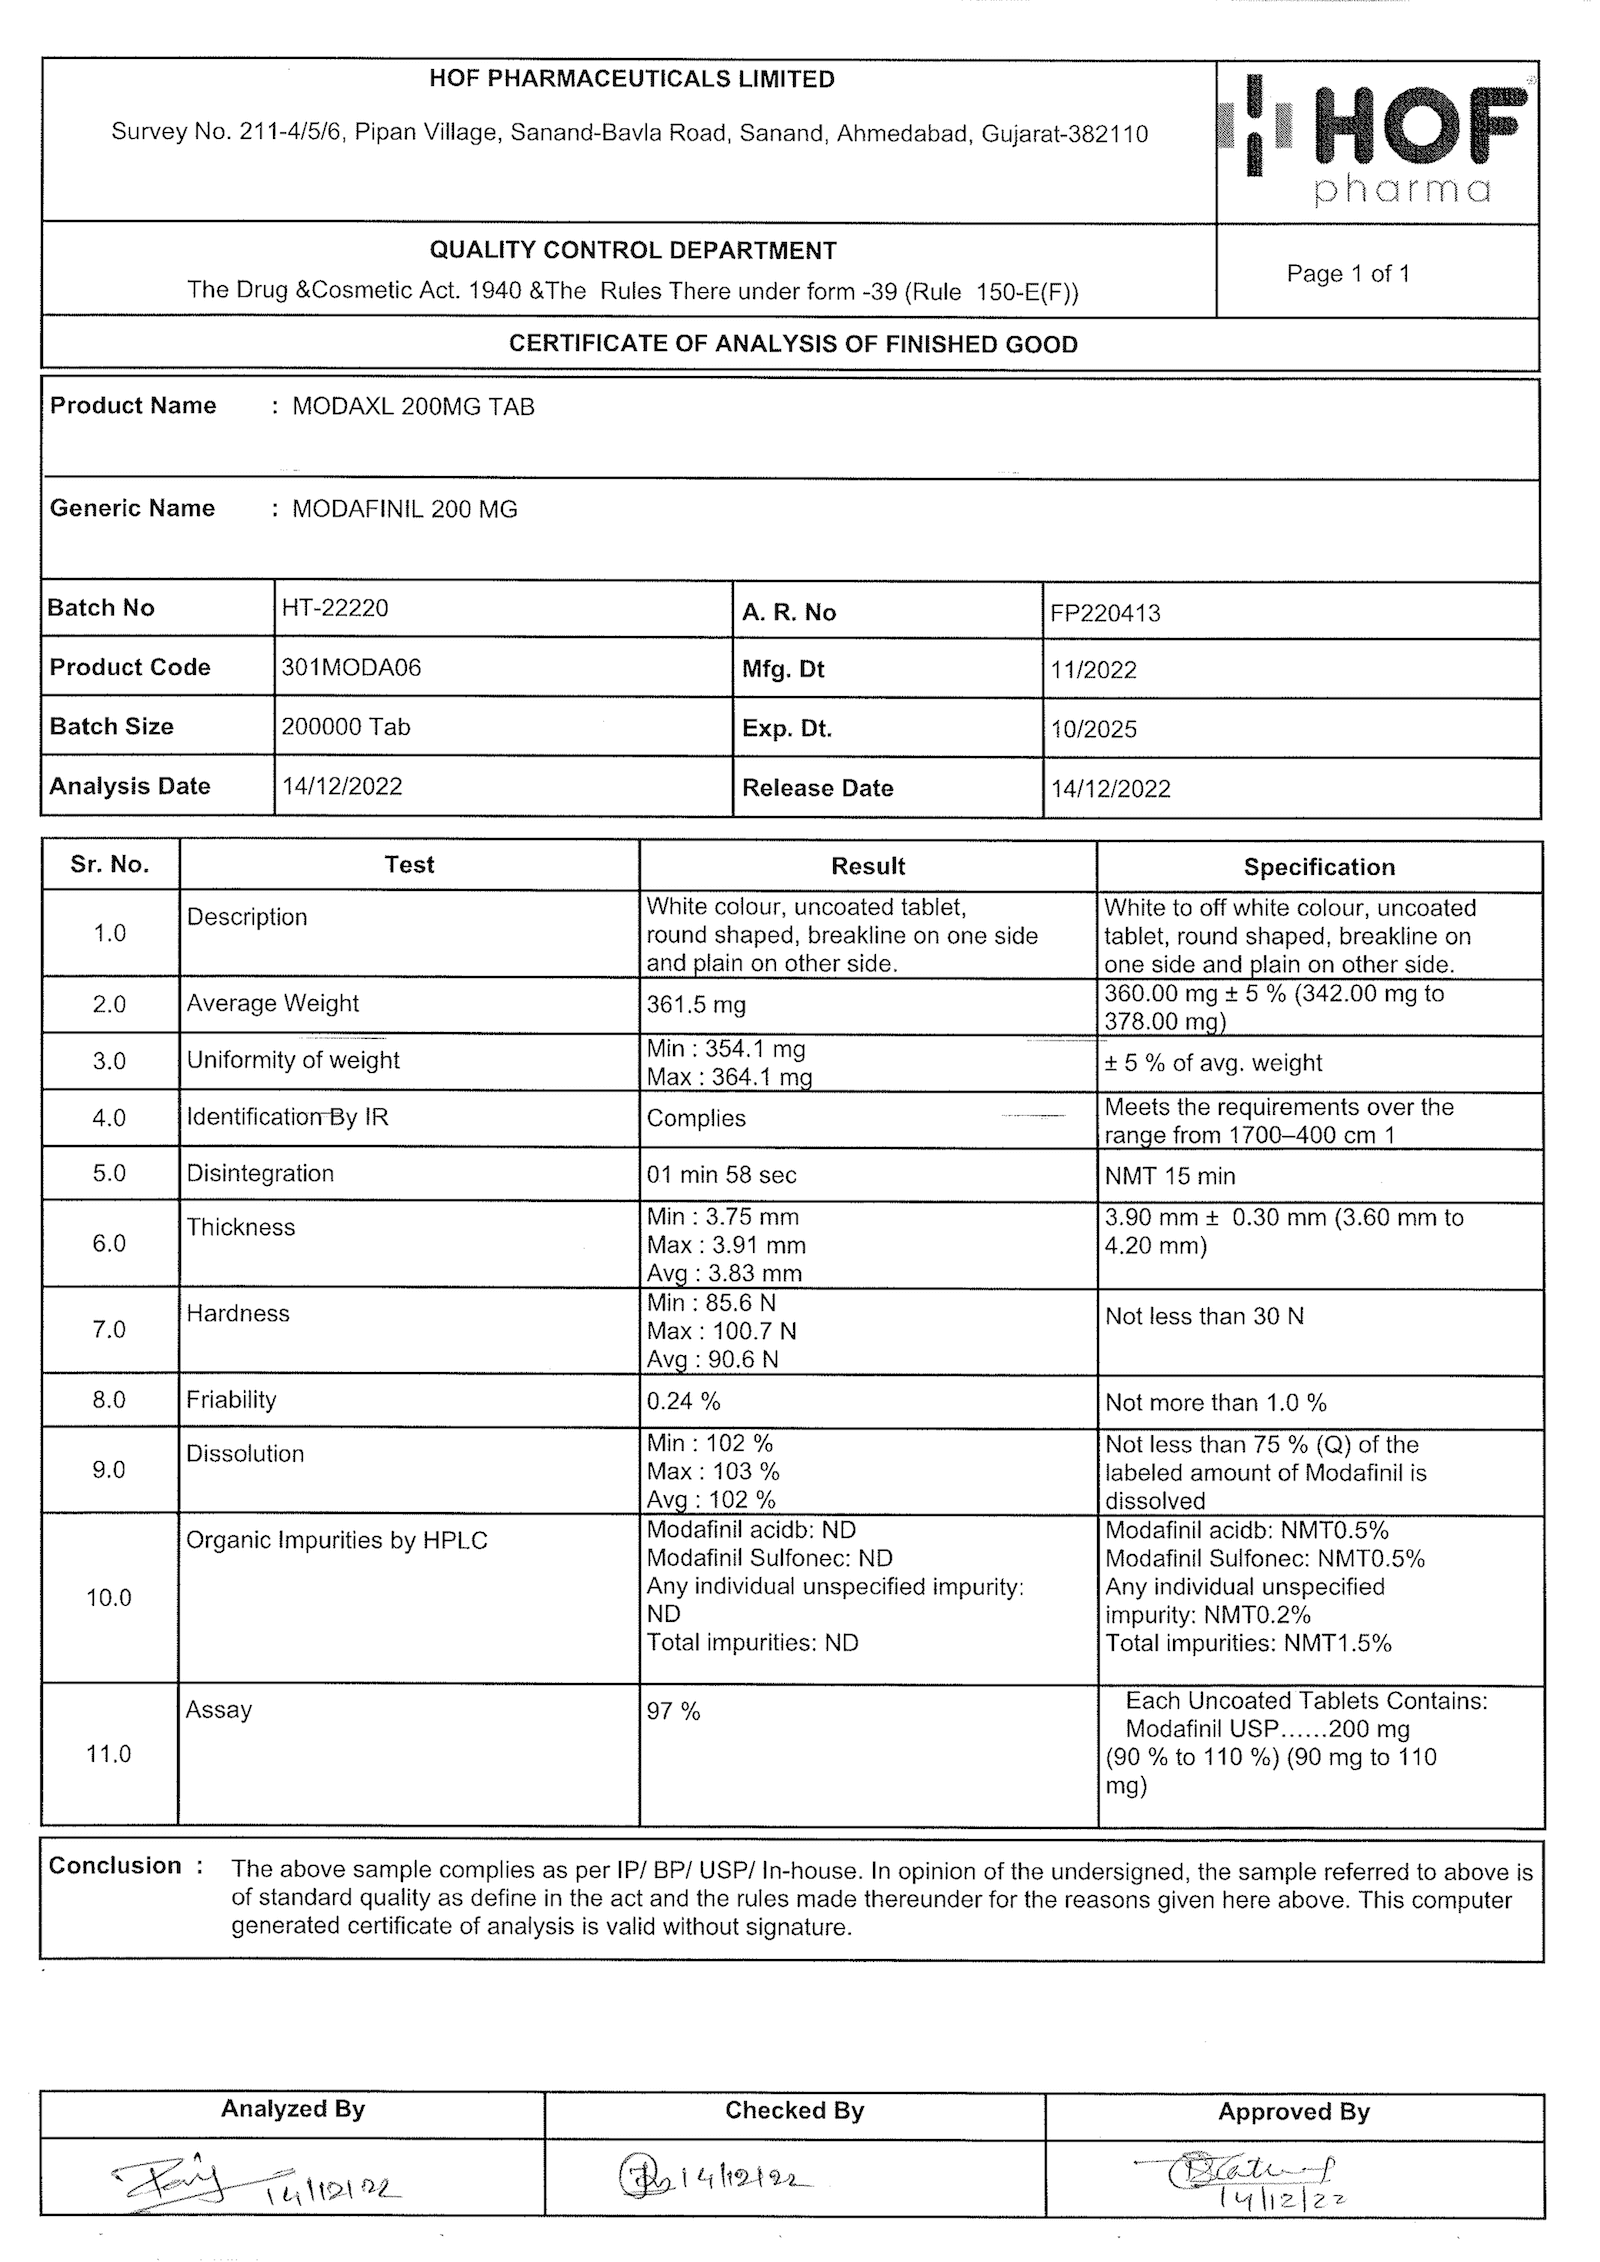 ModaXL 200mg Certificate of Analysis